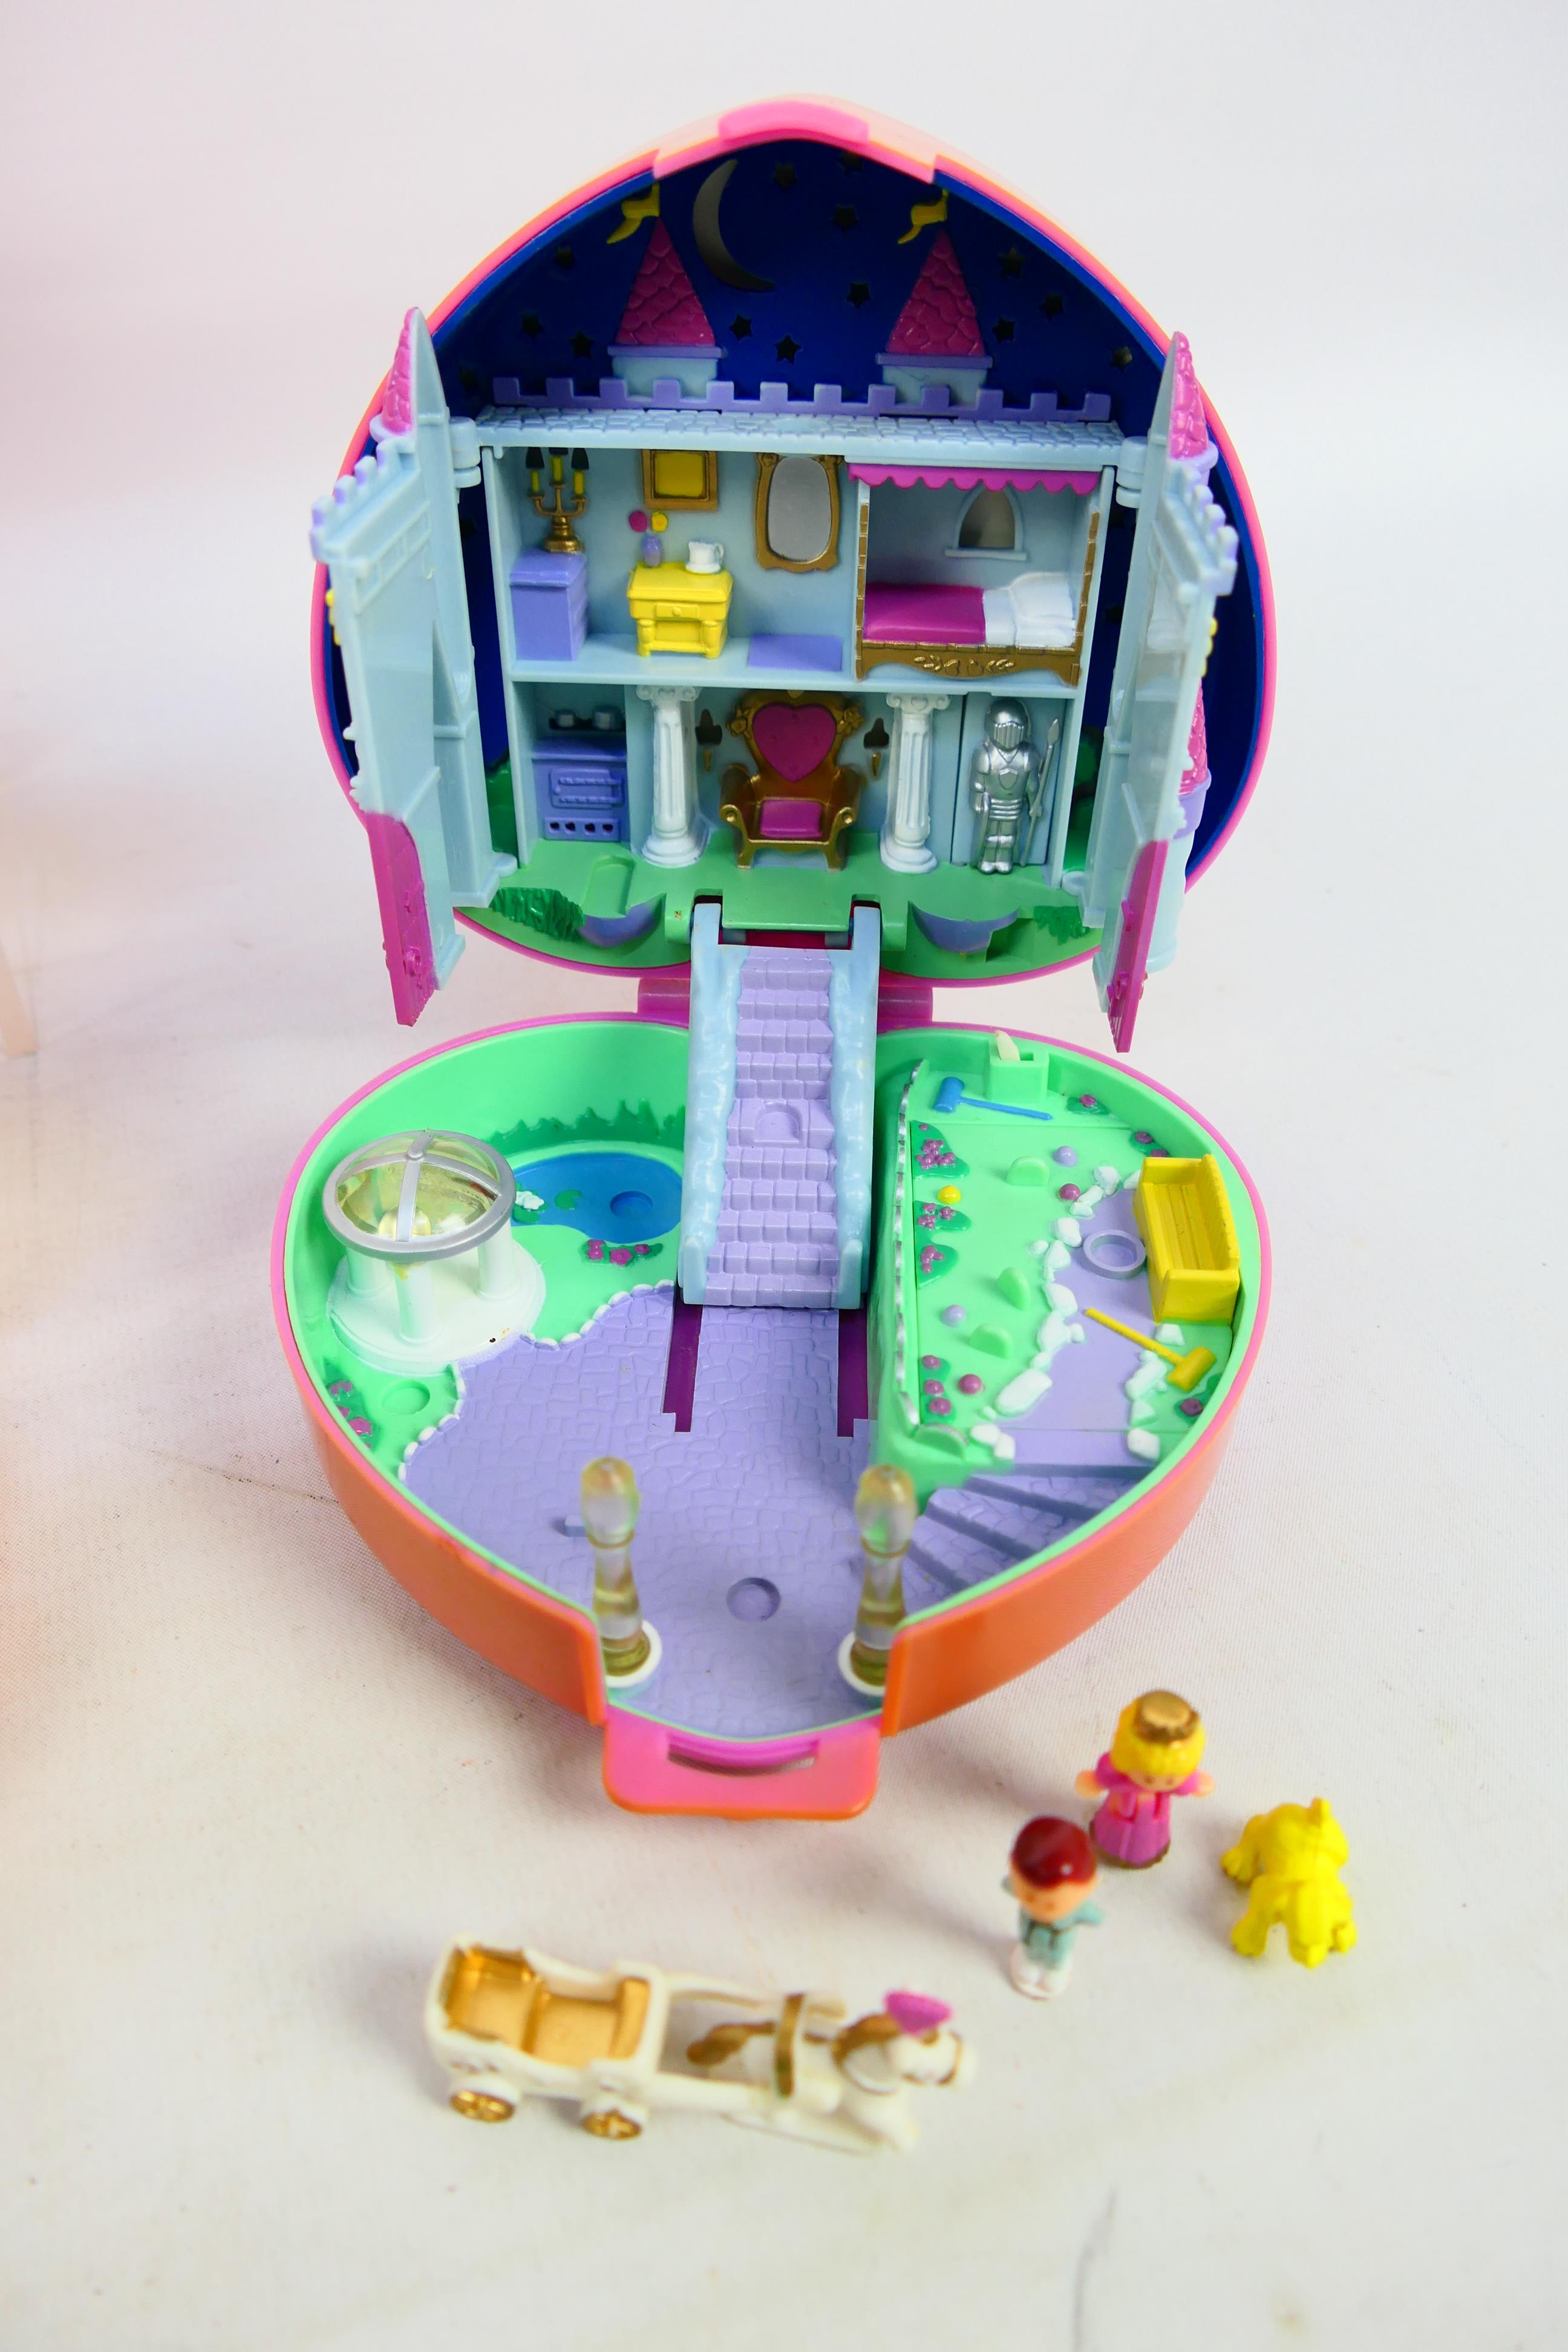 Bluebird Toys - Polly Pocket - Vivid Imaginations - Polly Pocket Tammy's Palm Tree Island, - Image 6 of 11